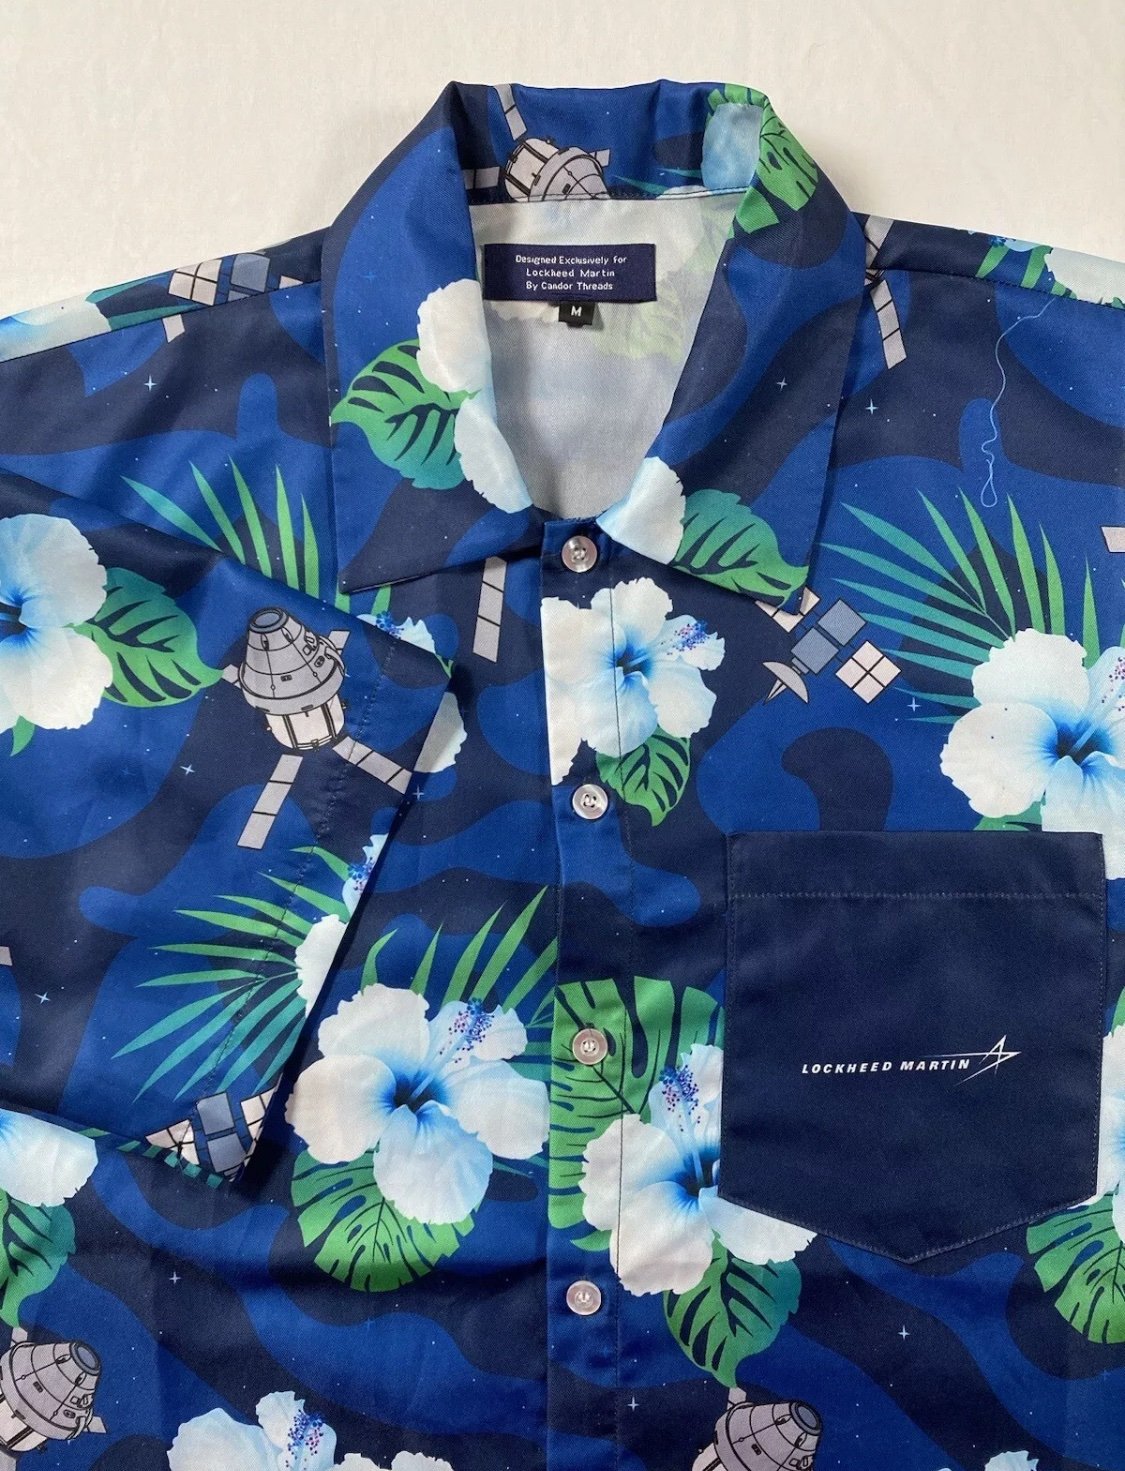 I did find cool Hawaiian satellite shirts that I kinda want now